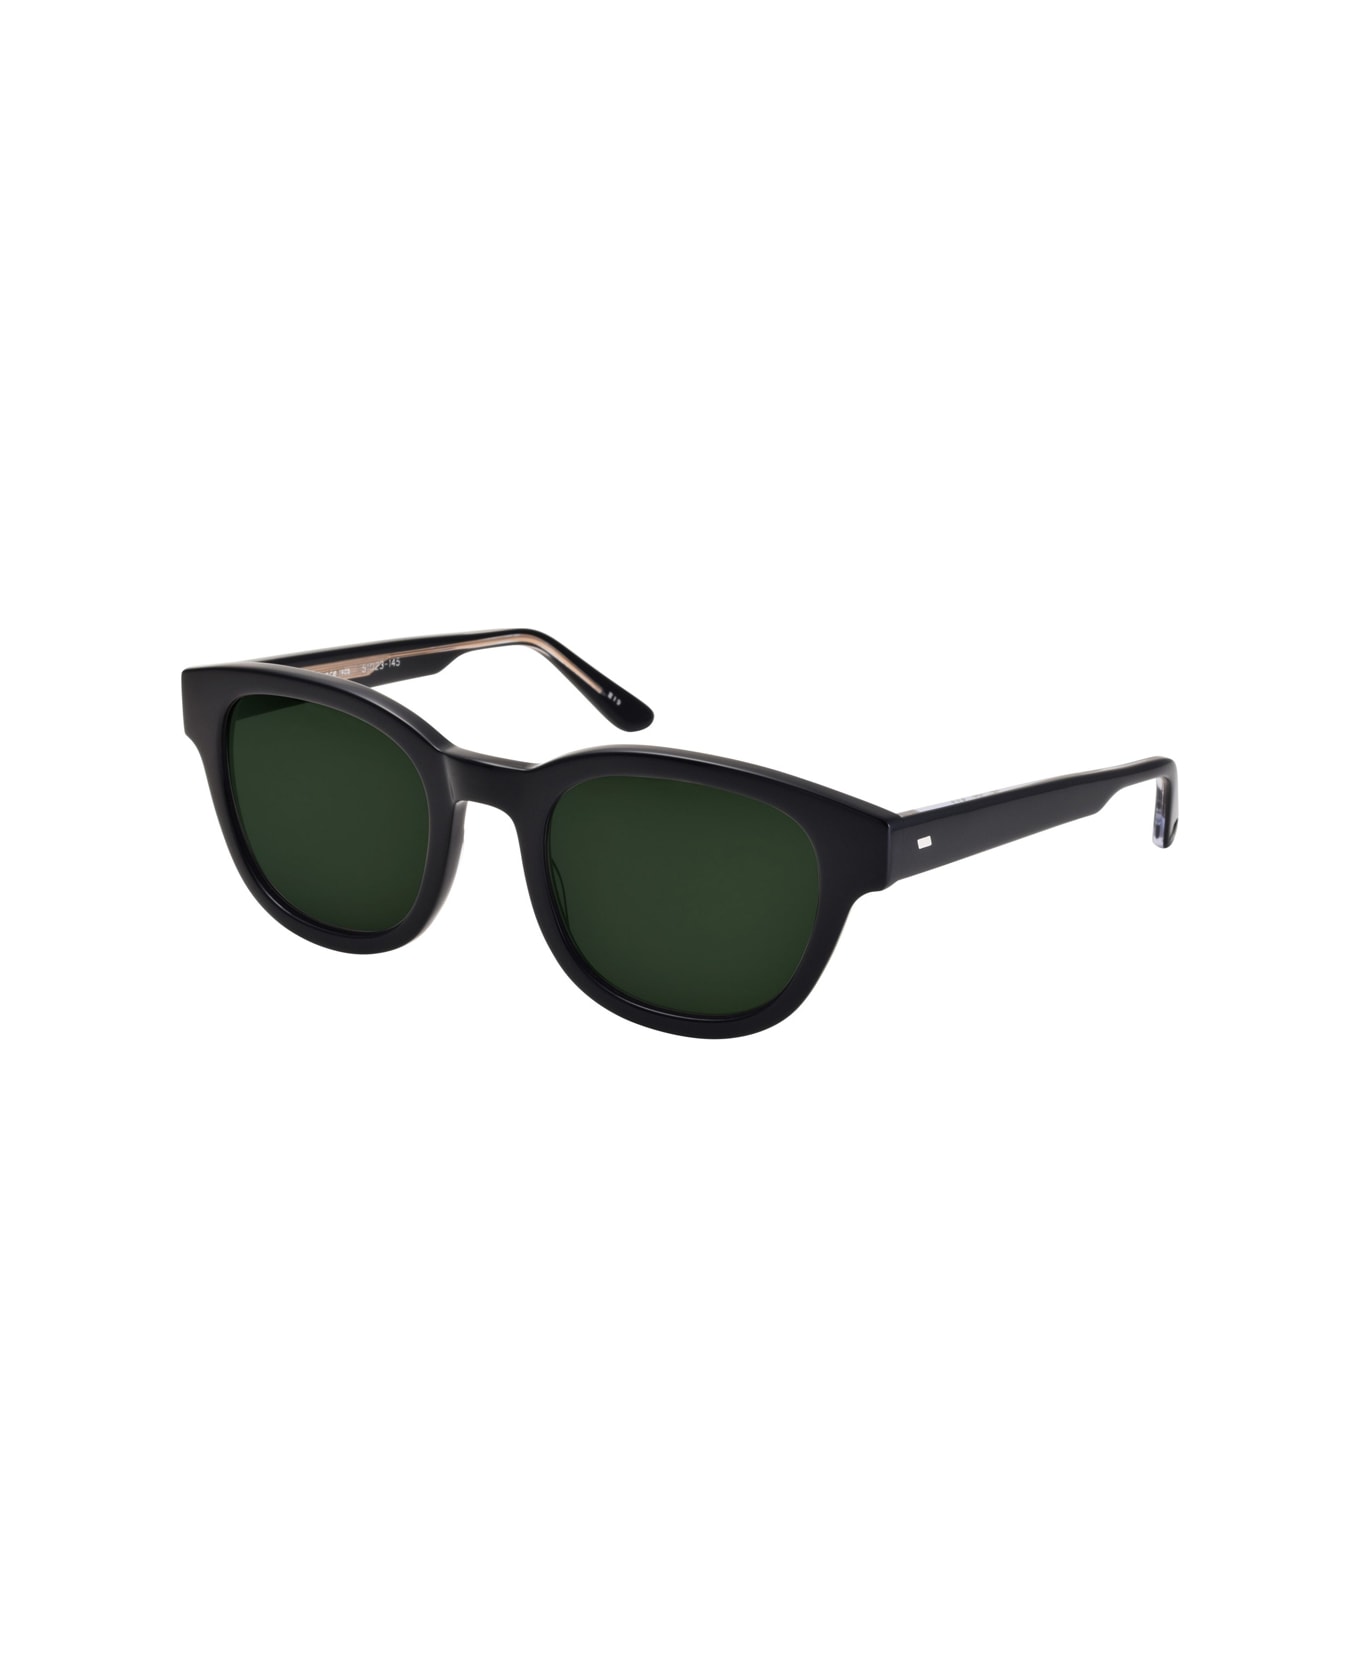 Masunaga Kk 096 S19 Sunglasses - Nero